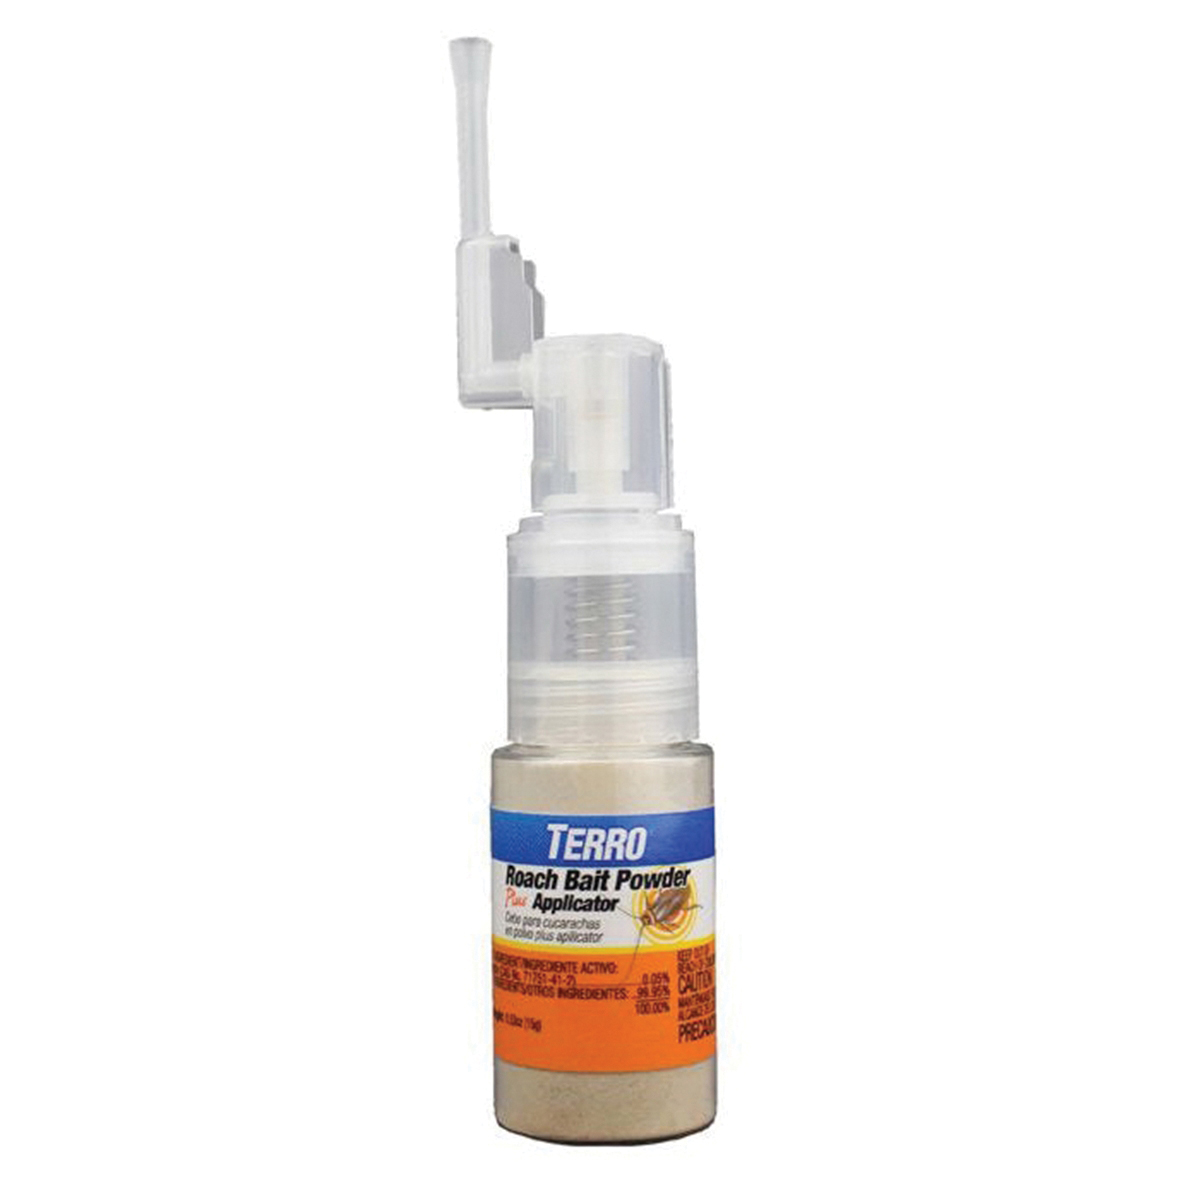 T530 Roach Powder Plus Applicator, Powder, Squeeze Application, Indoor, Outdoor, 0.53 oz, Tube